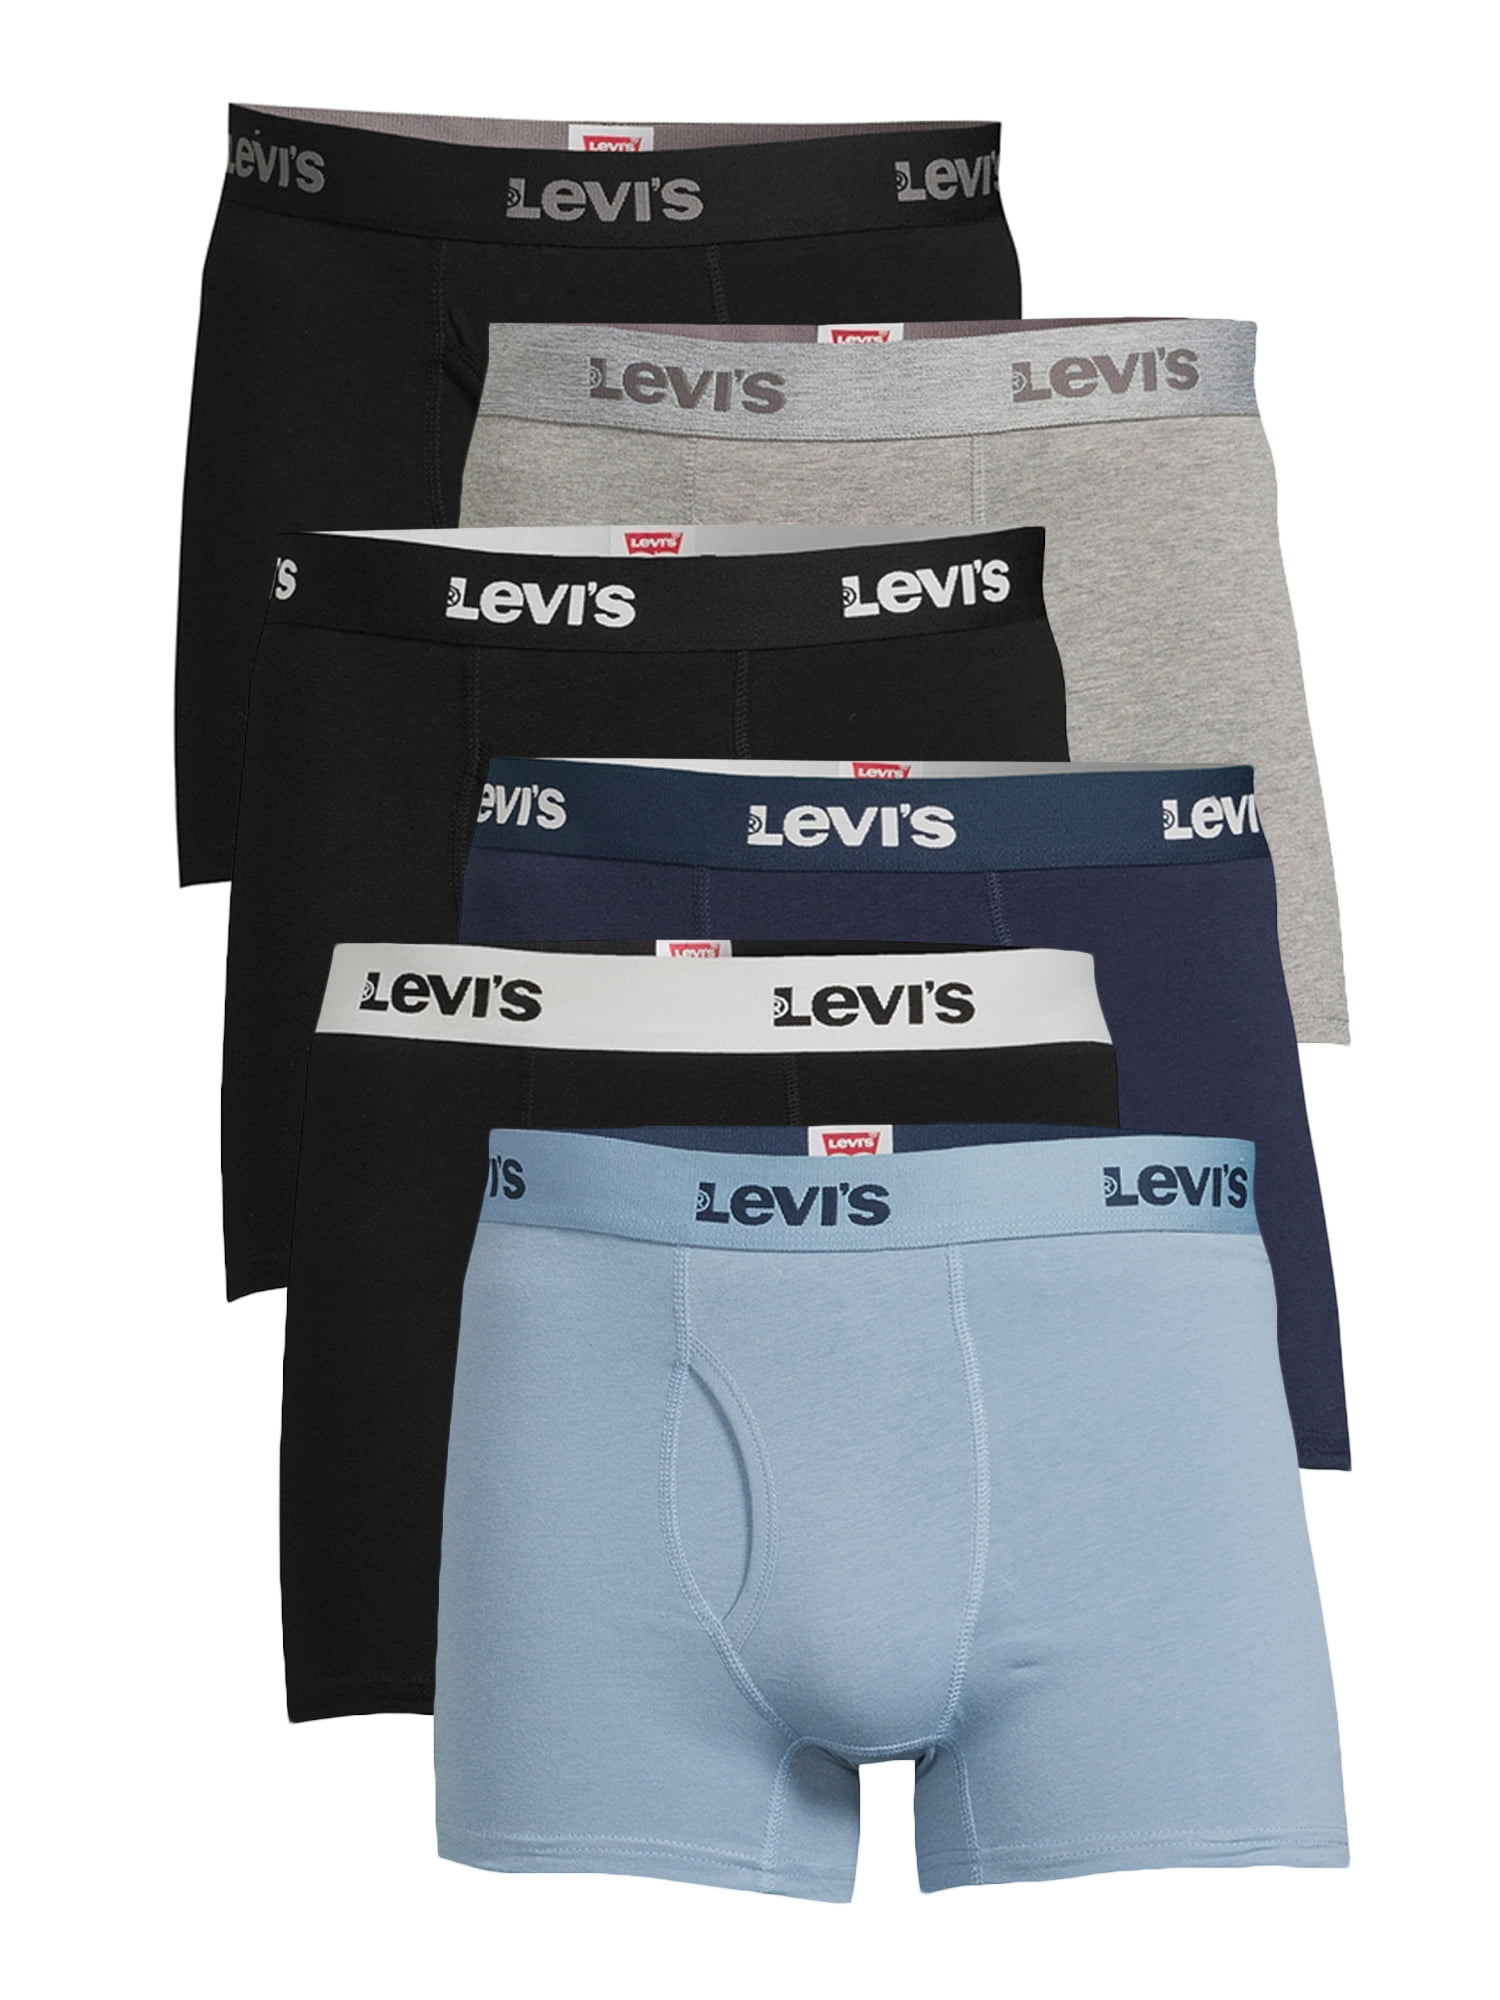 Levi’s, Adult Mens, 6 Pack Cotton Stretch Boxer Brief, Size S-XL